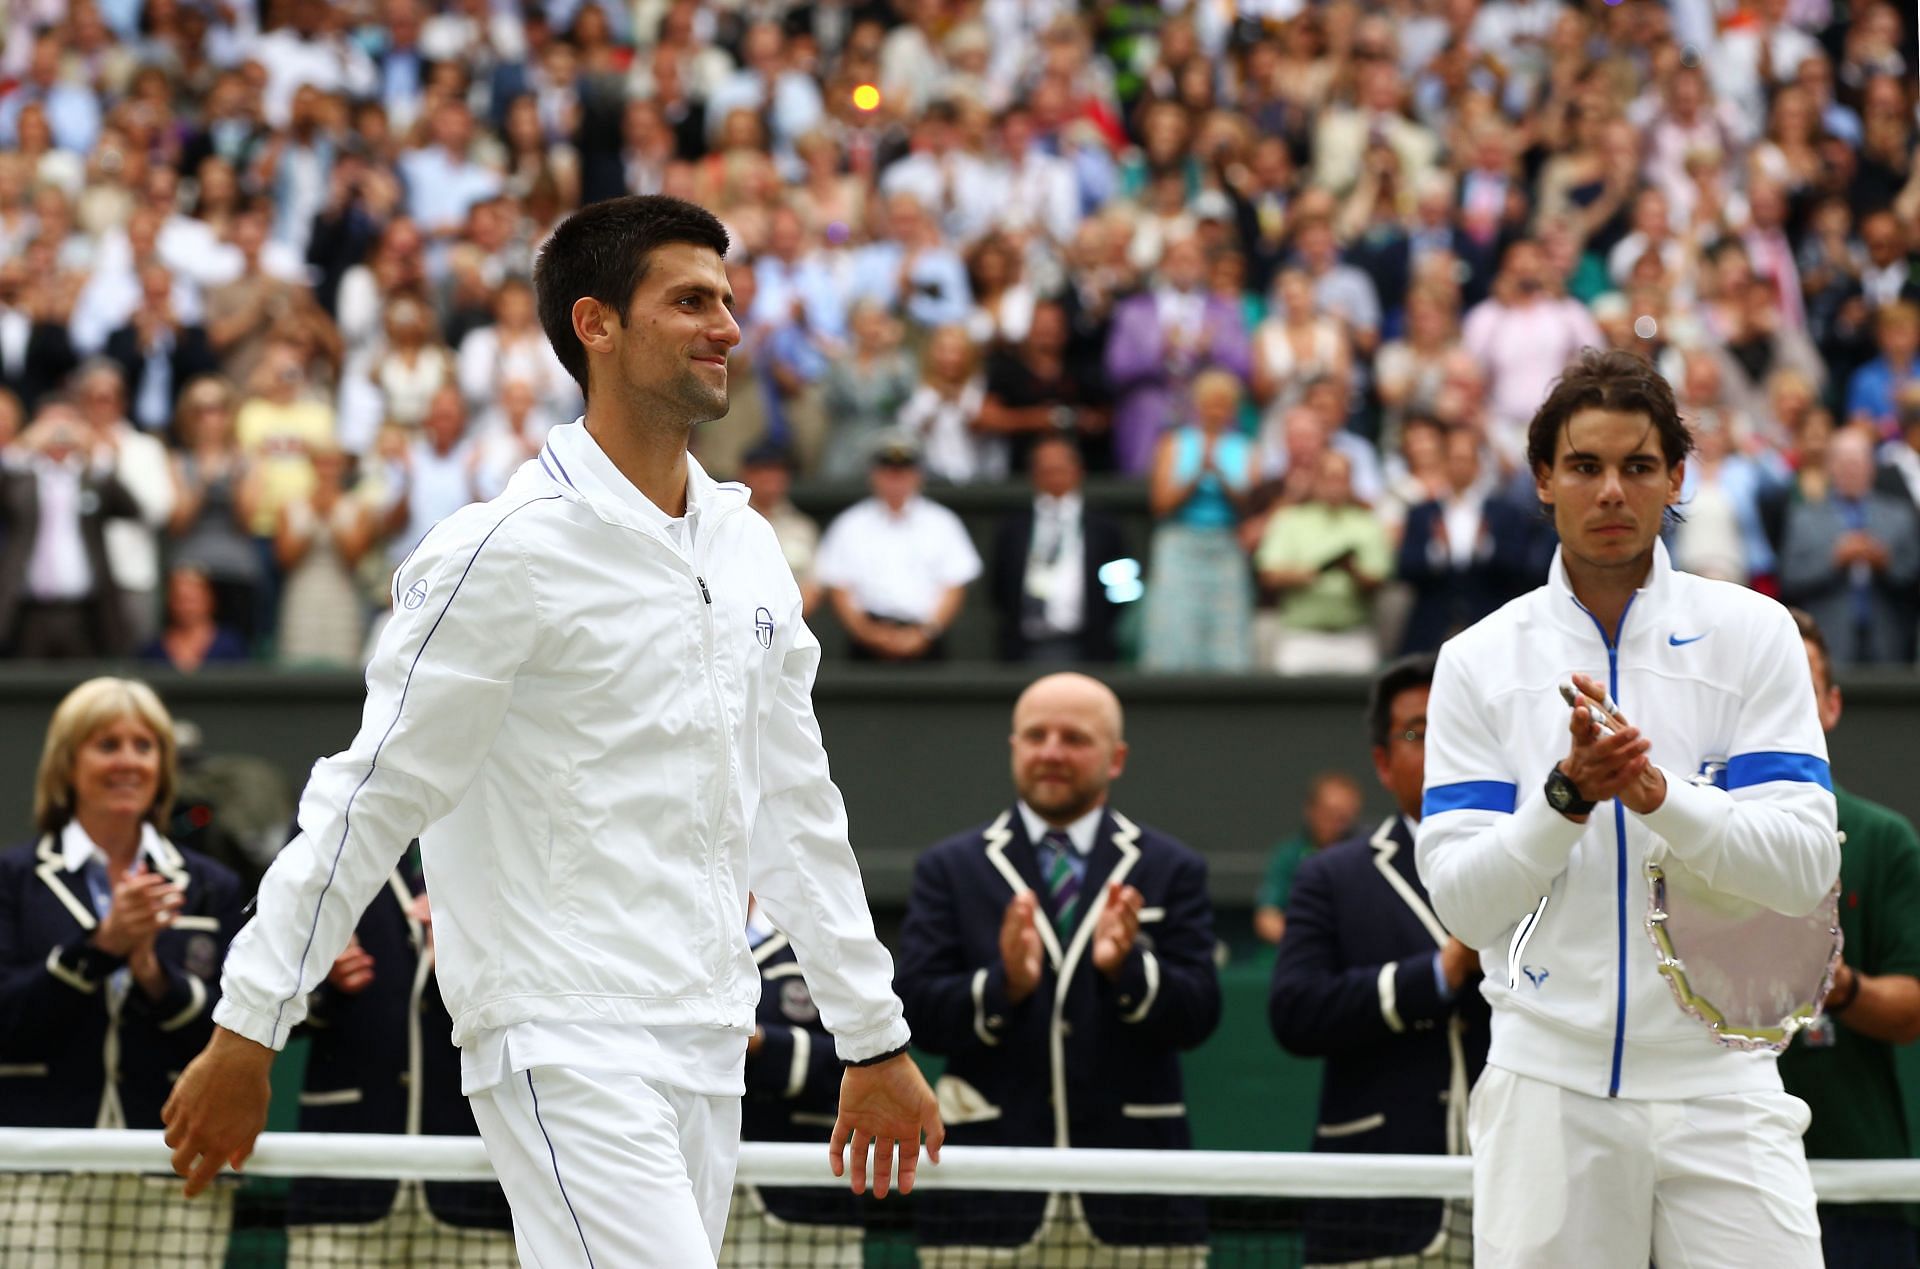 Novak Djokovic won his seventh Wimbledon title